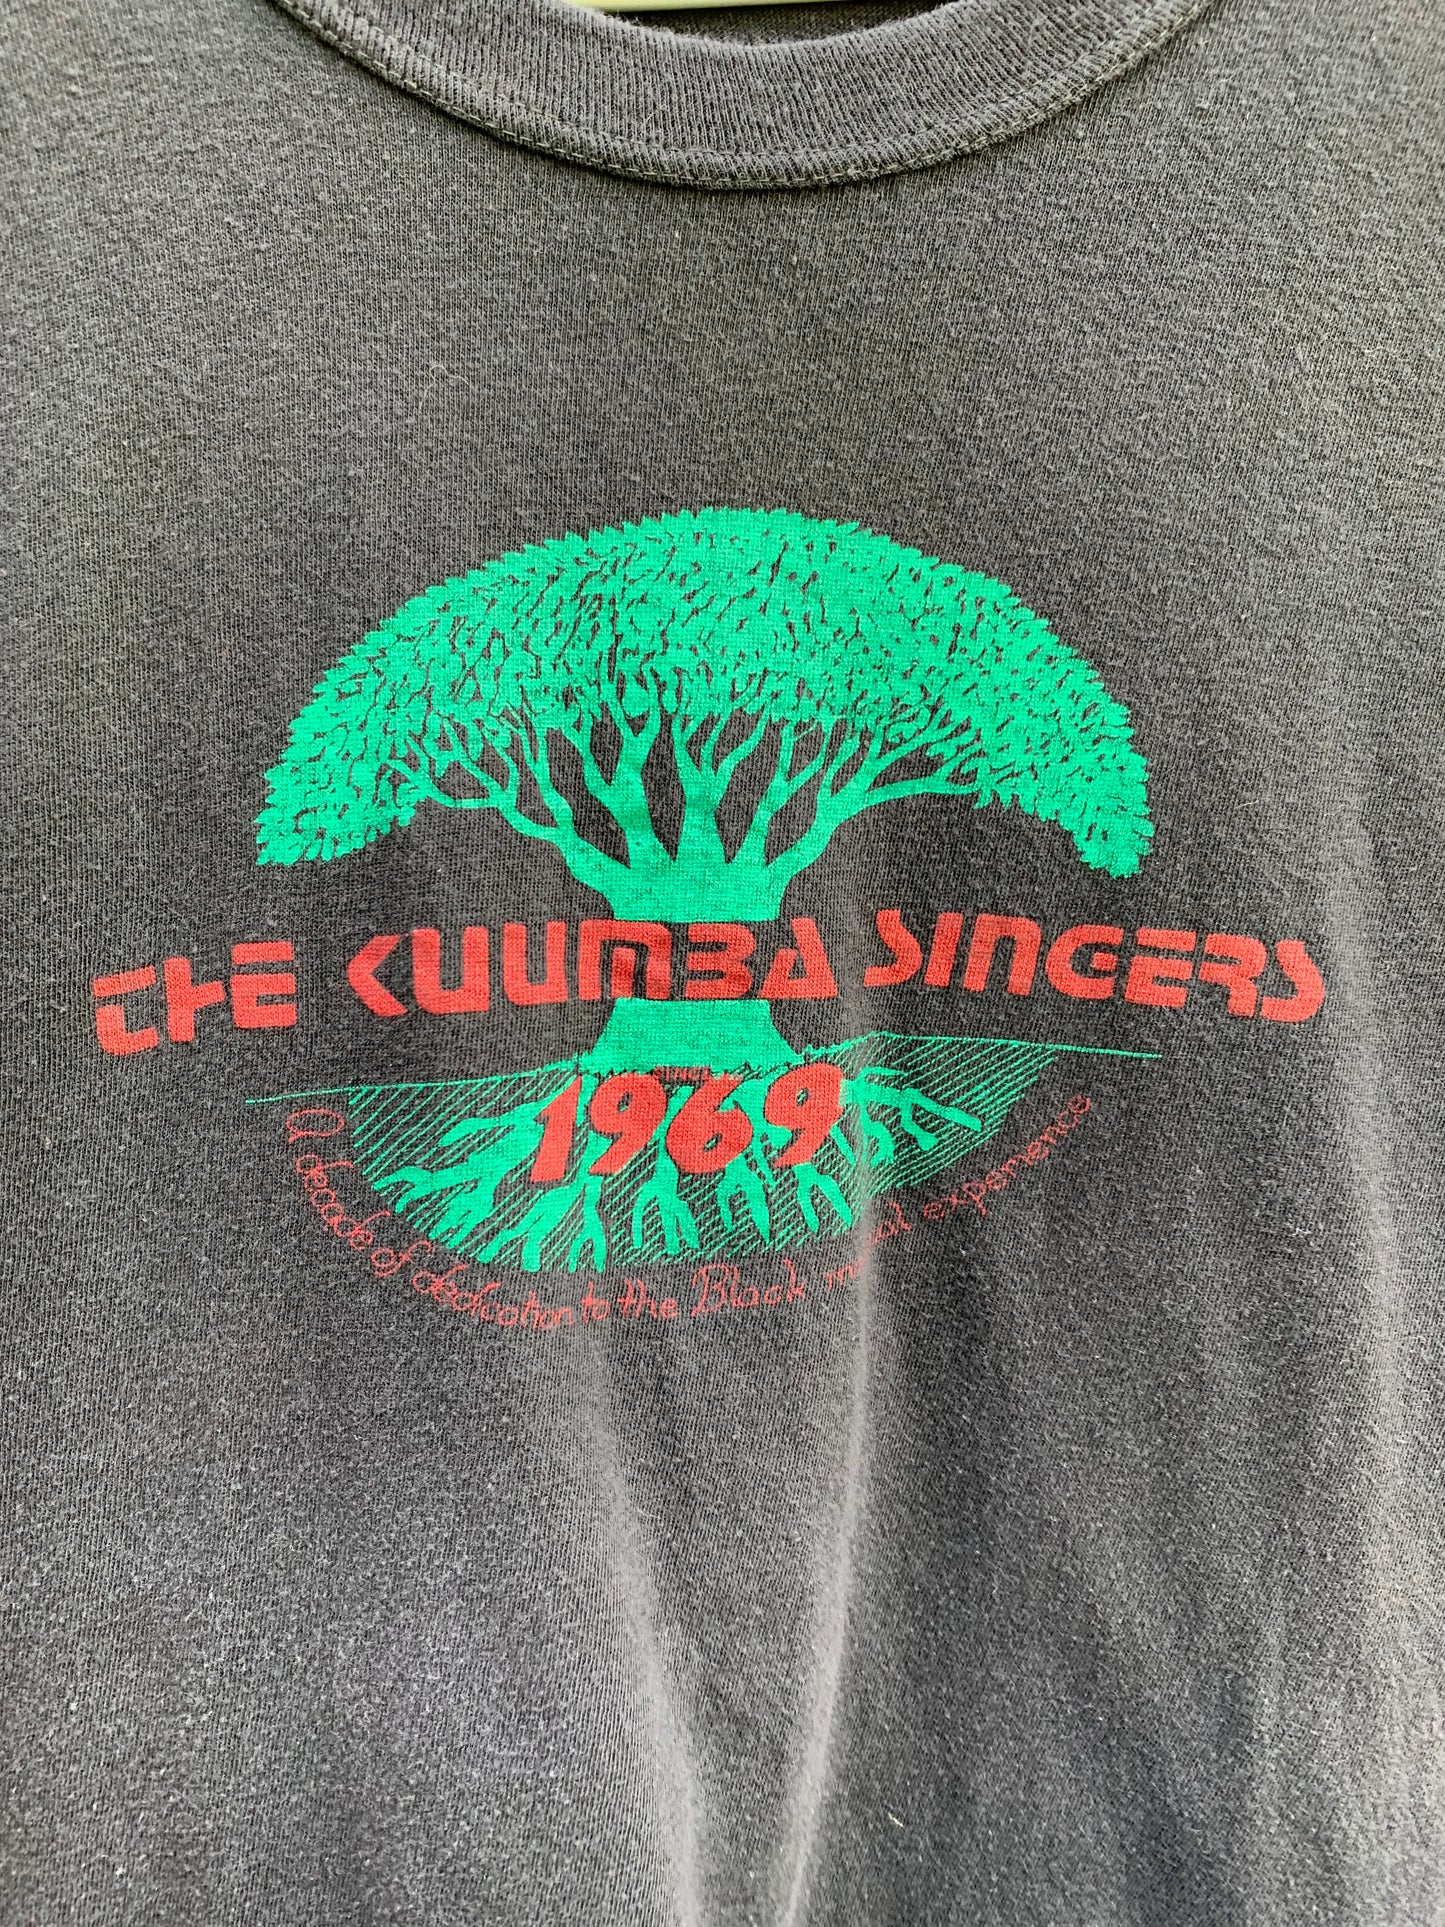 1969 The Cuumba Singers Tee (S/M)